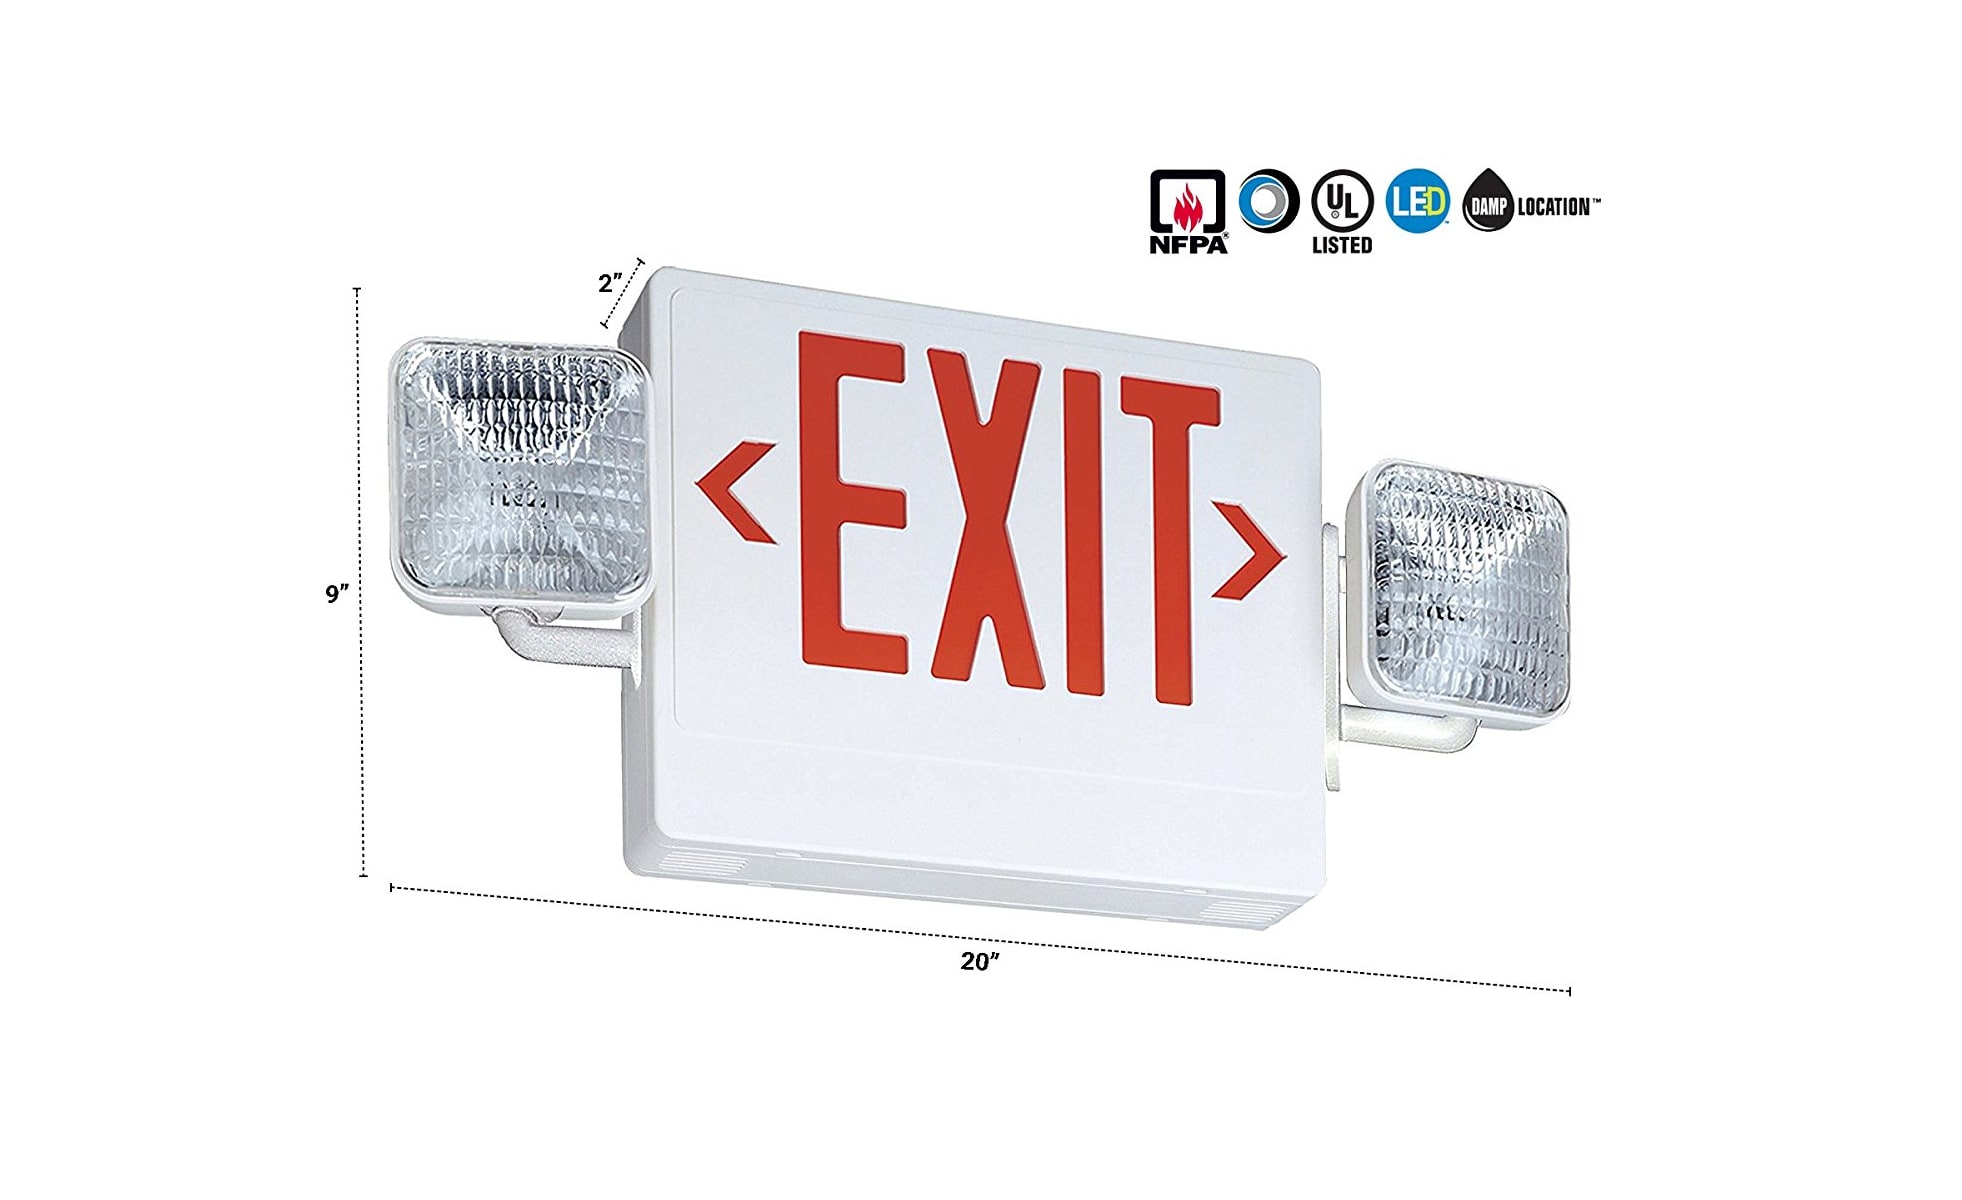 White/Red Lithonia Lighting ECR Led M6 Integrated Led Exit/Unit Combo Light